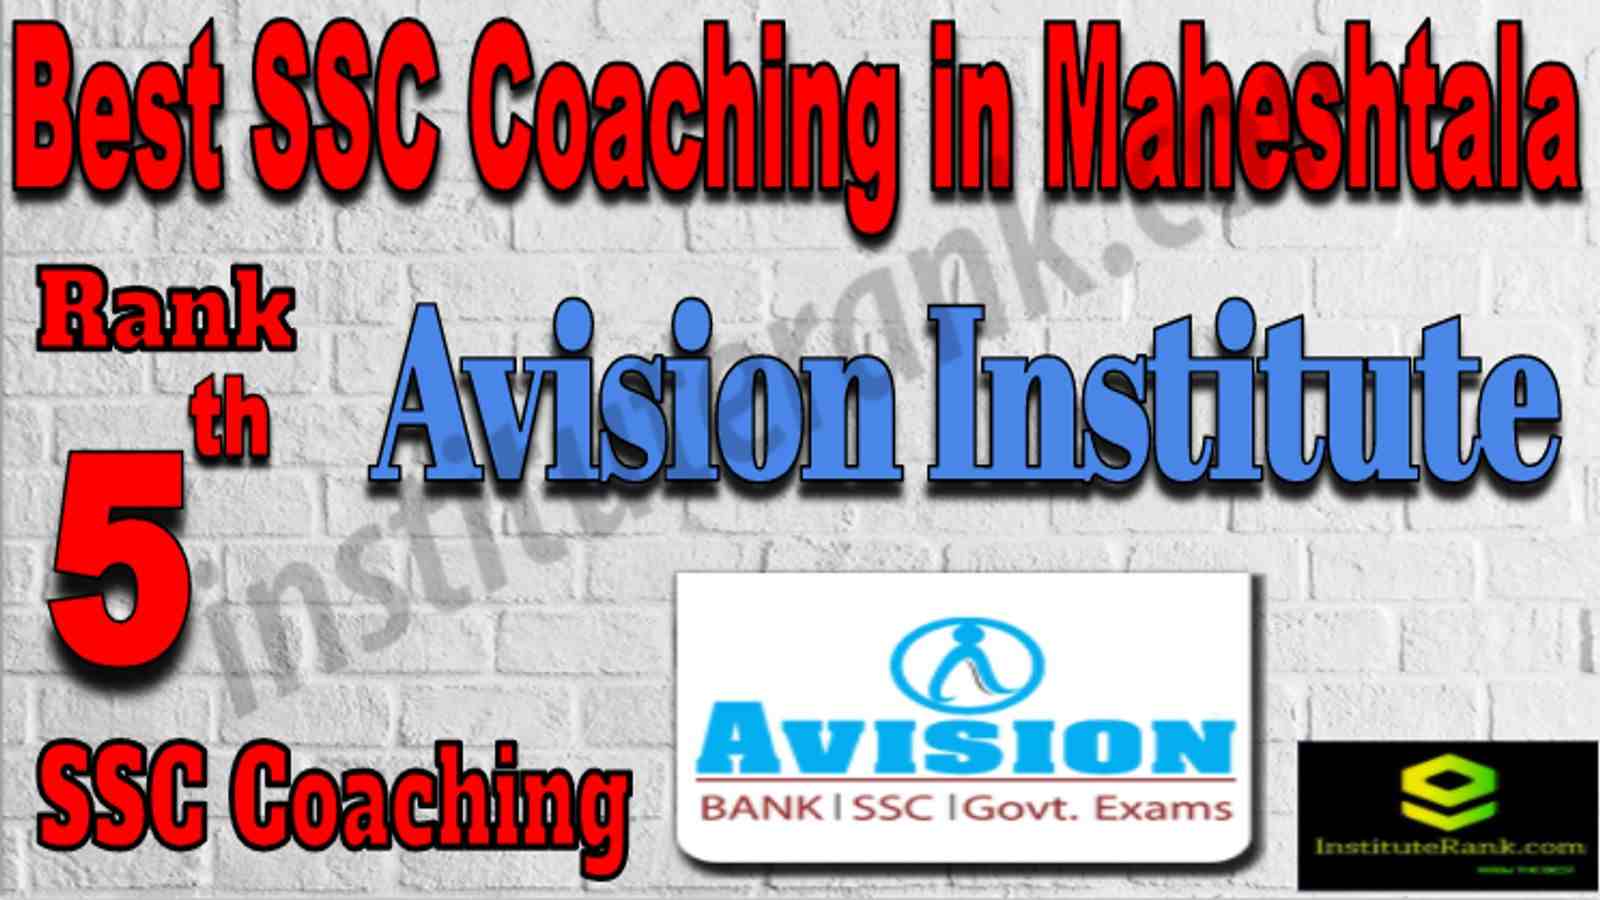 Rank 5 Best SSC Coaching in Maheshtala